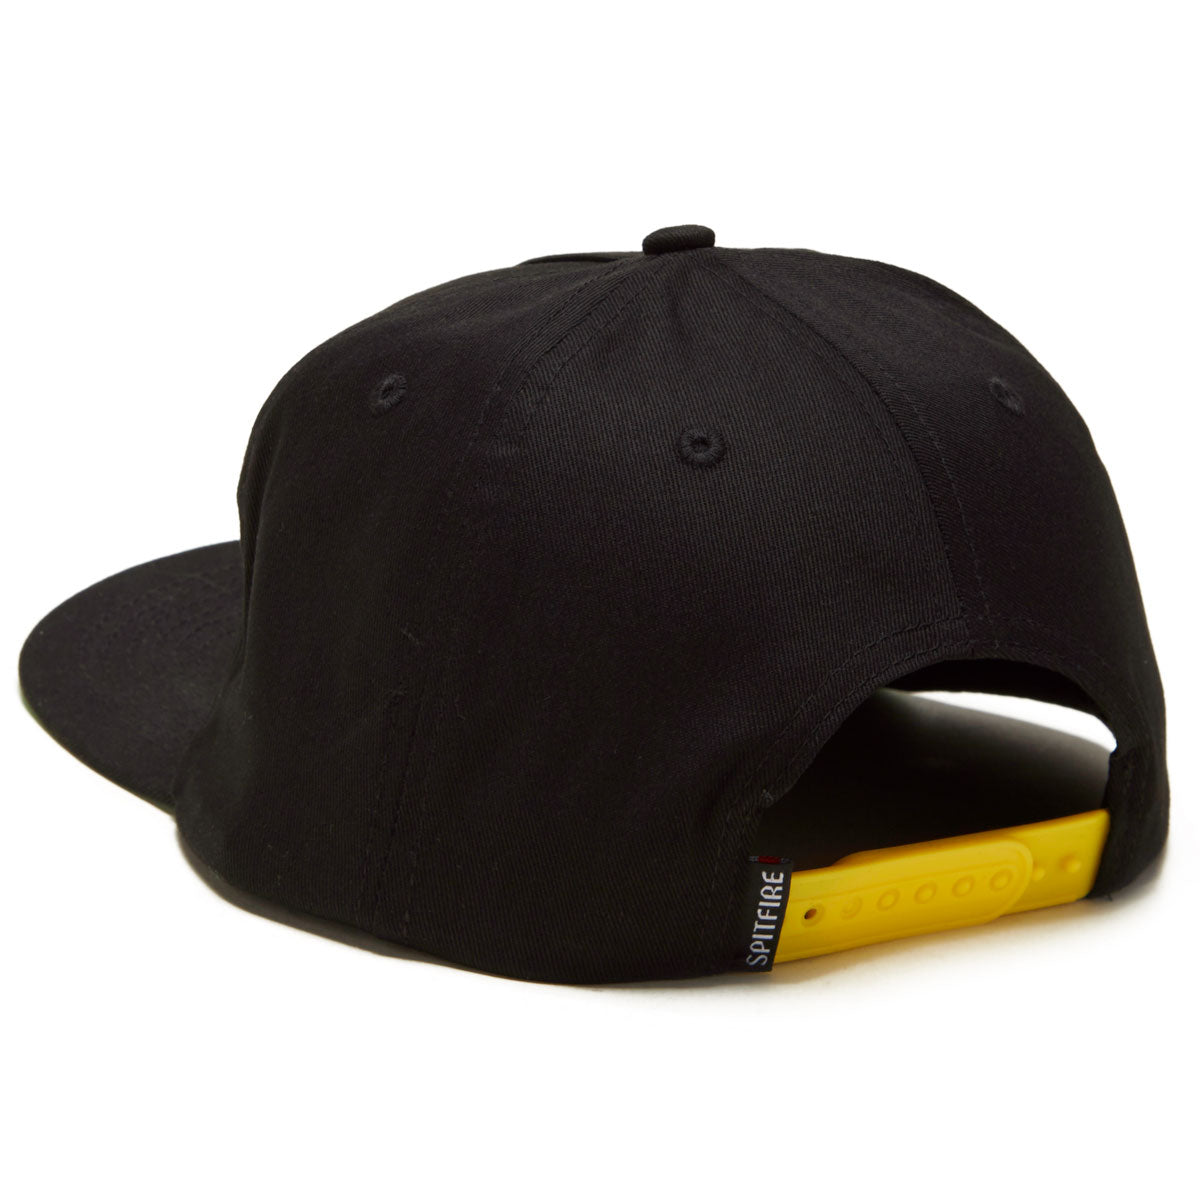 Spitfire Gonz Pro Classic Hat - Black/Yellow image 2